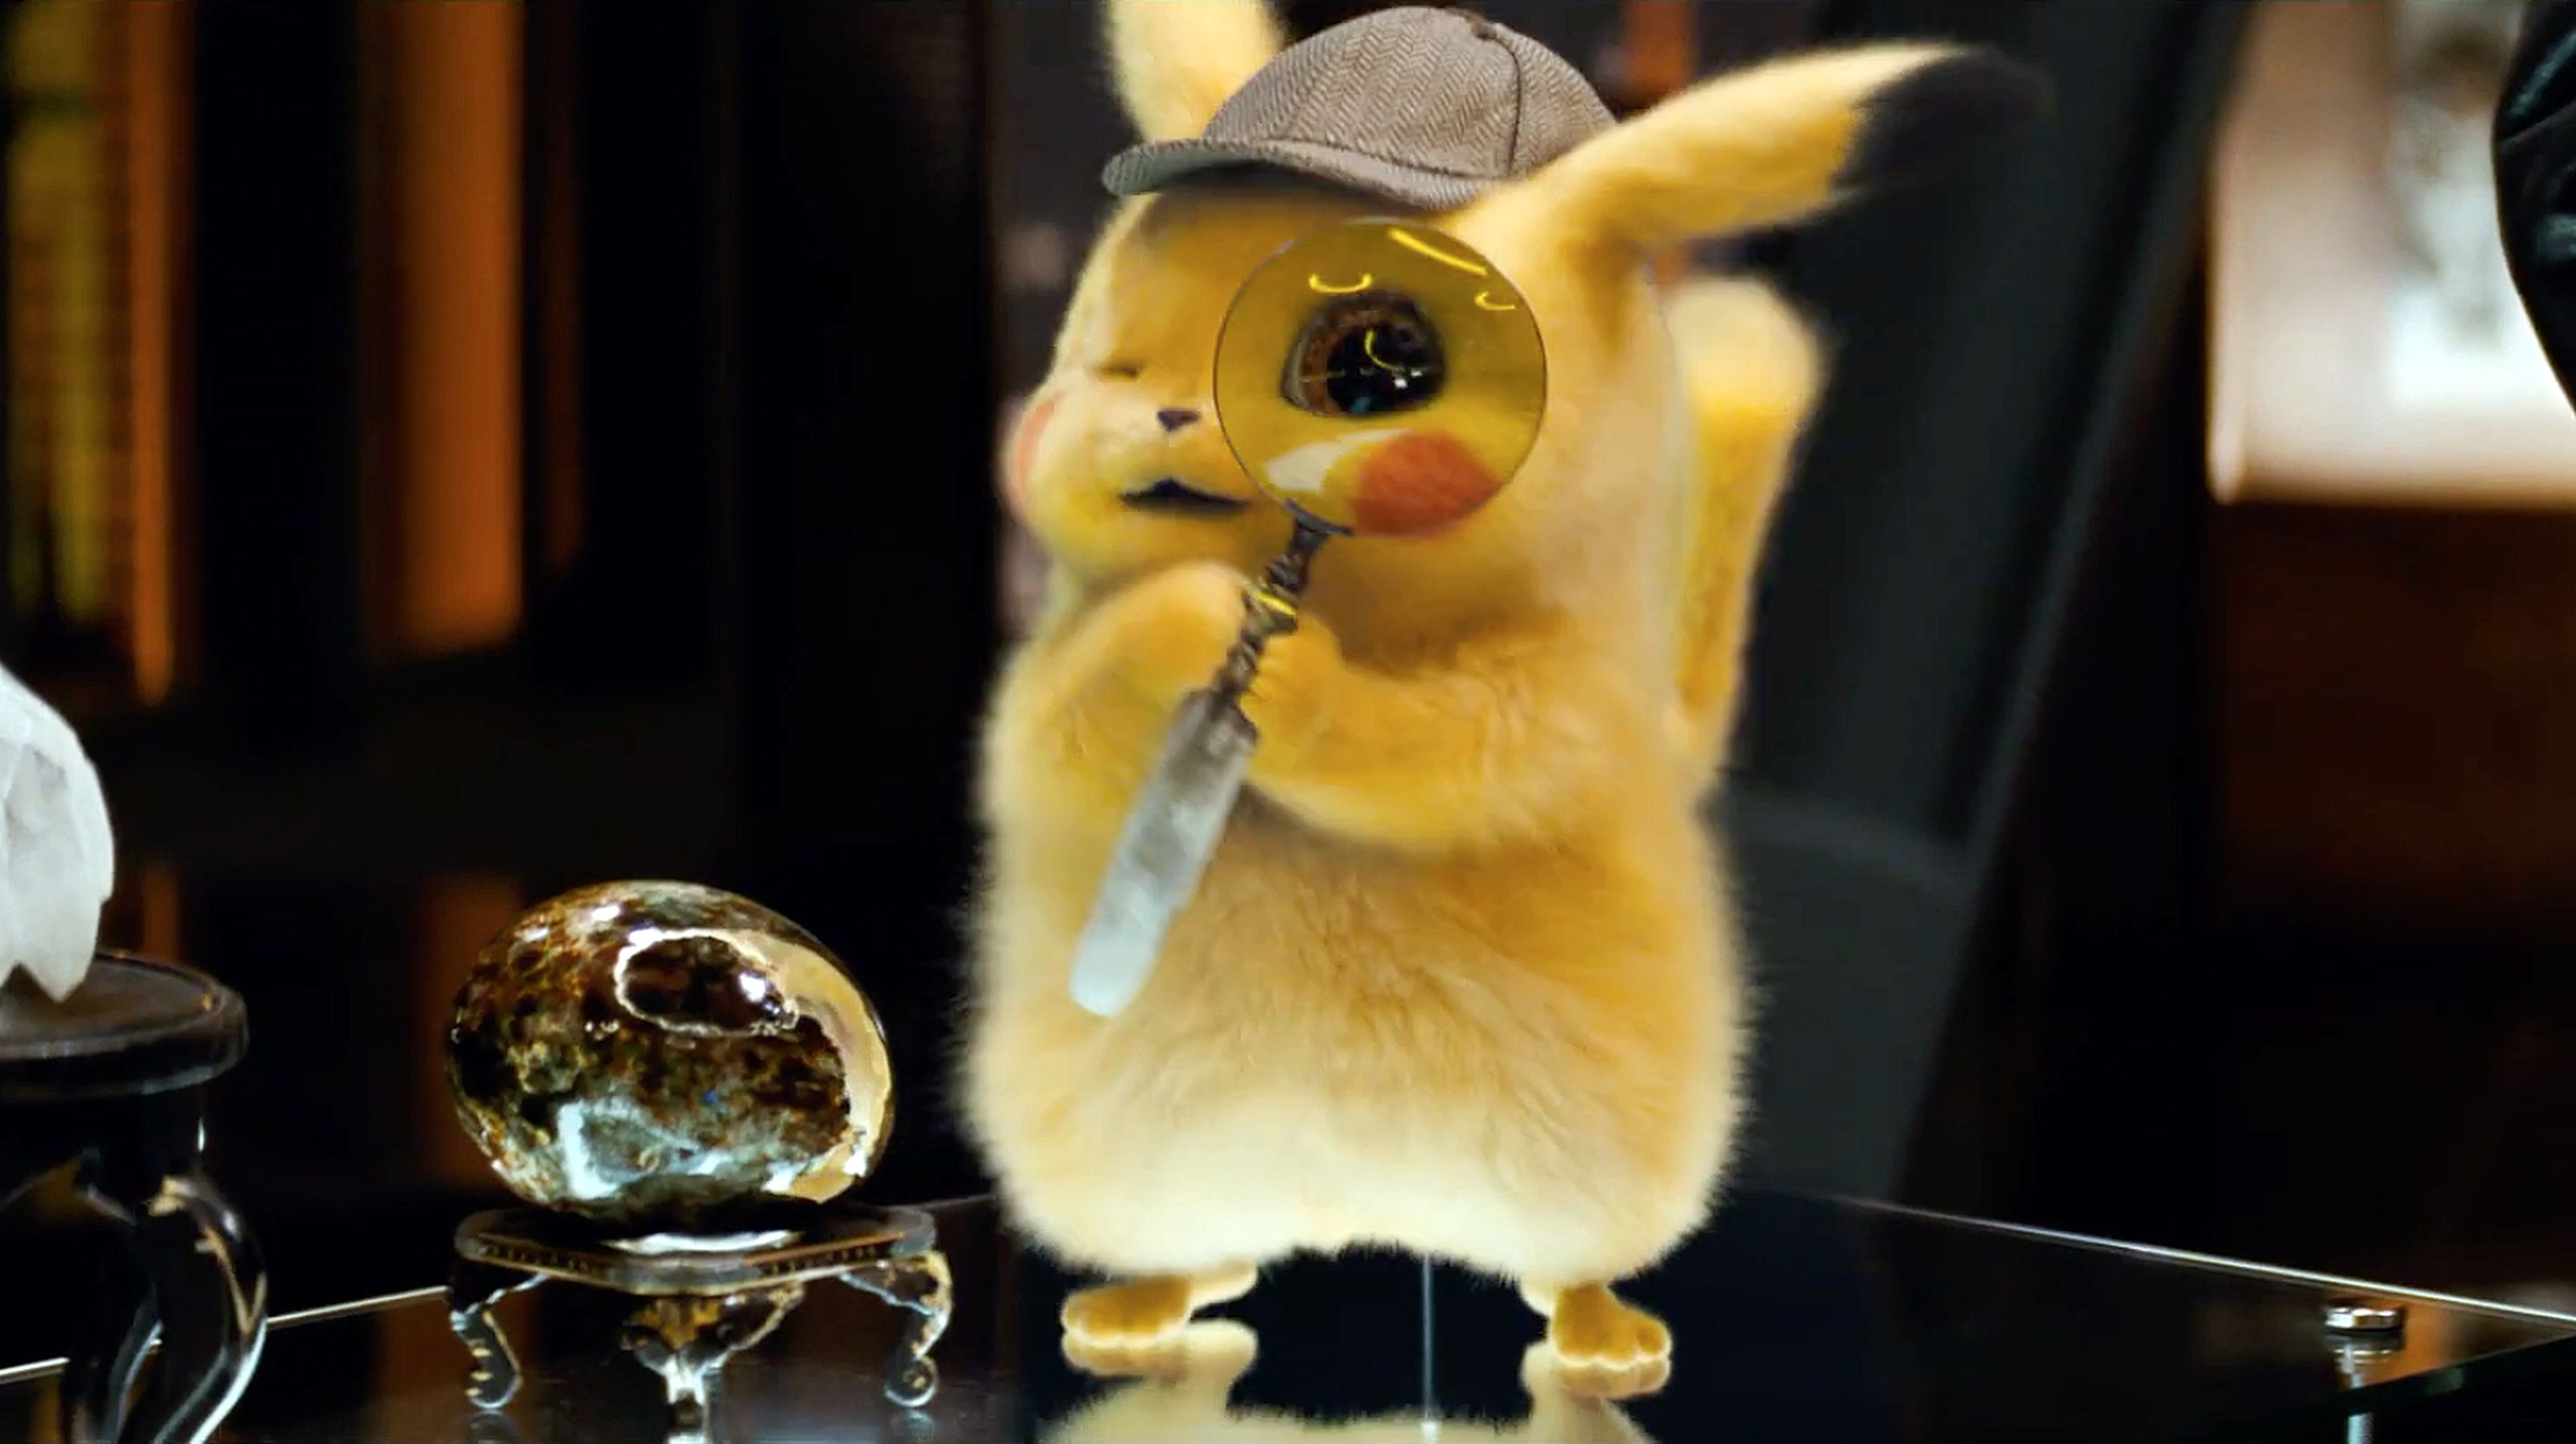 Detective Pikachu - Trailer 2 en español